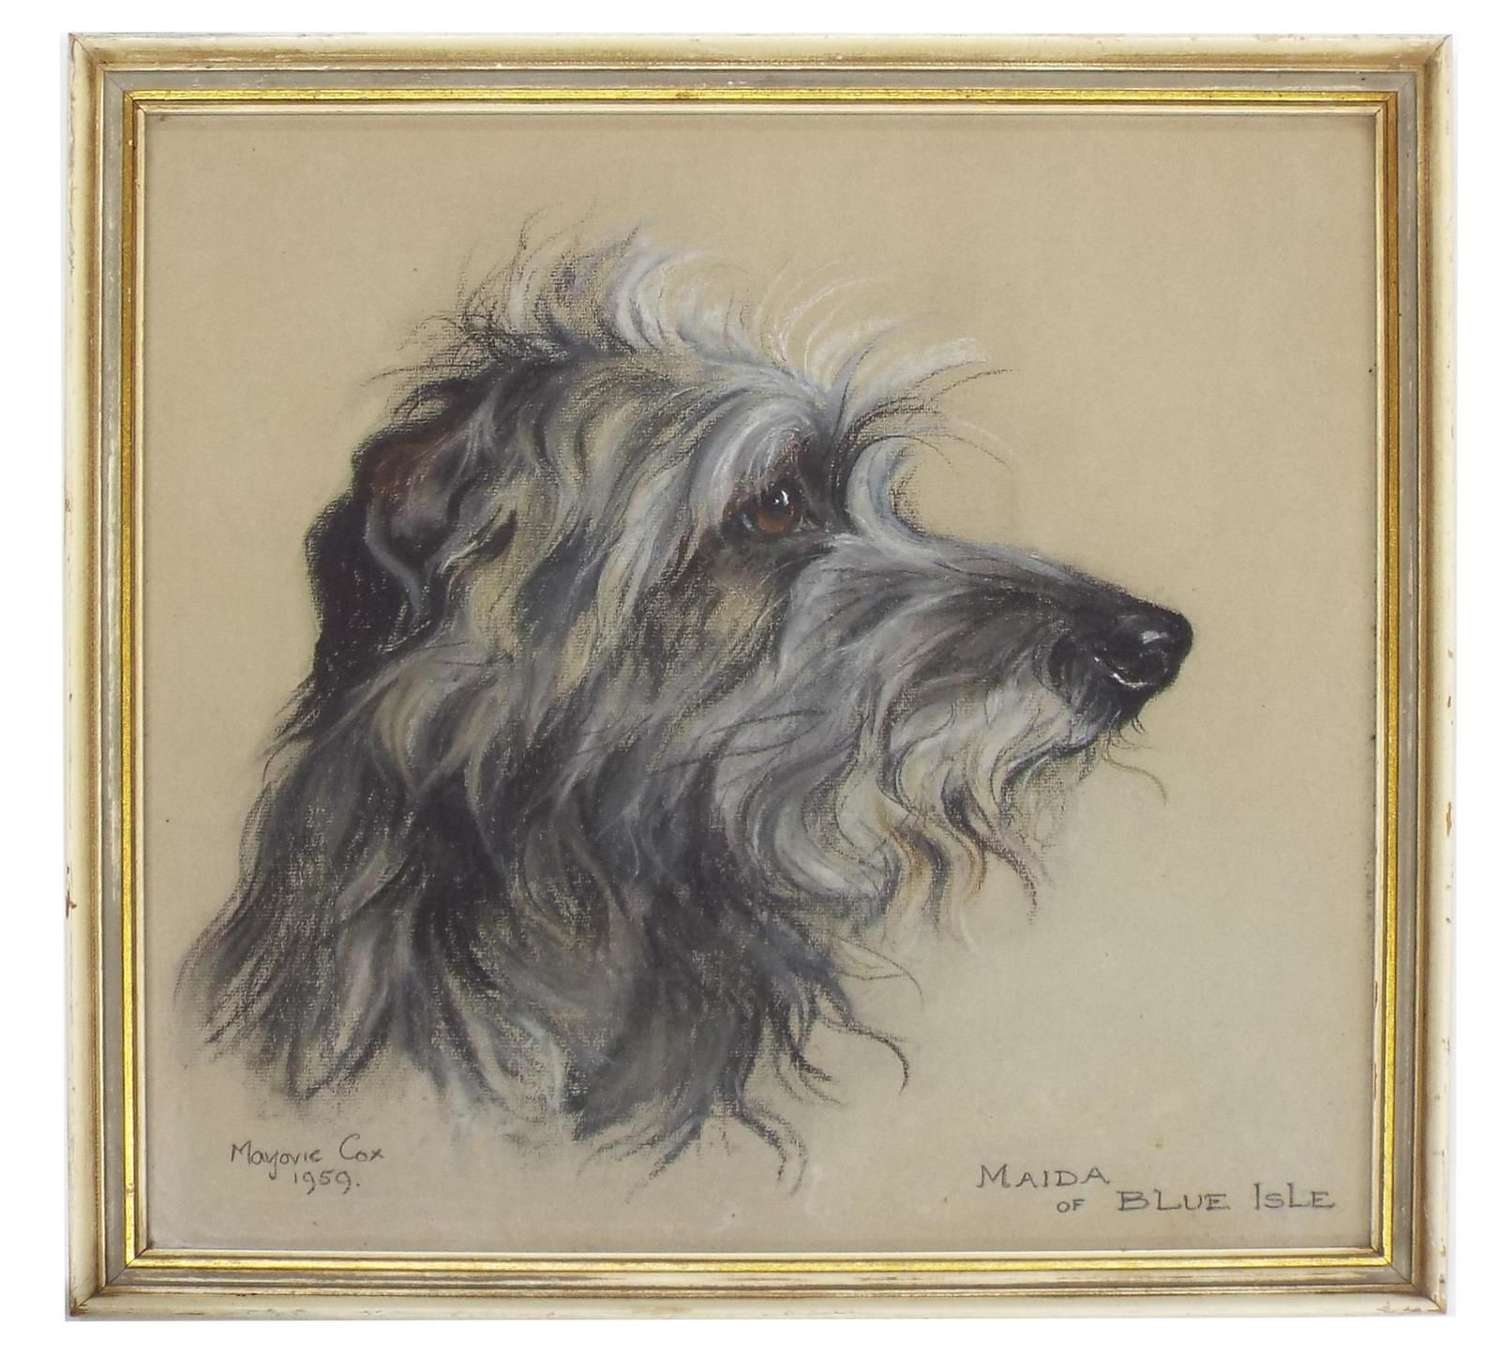 Marjorie Cox - Maida of Blue Isle, Study of a Deerhound, Signed